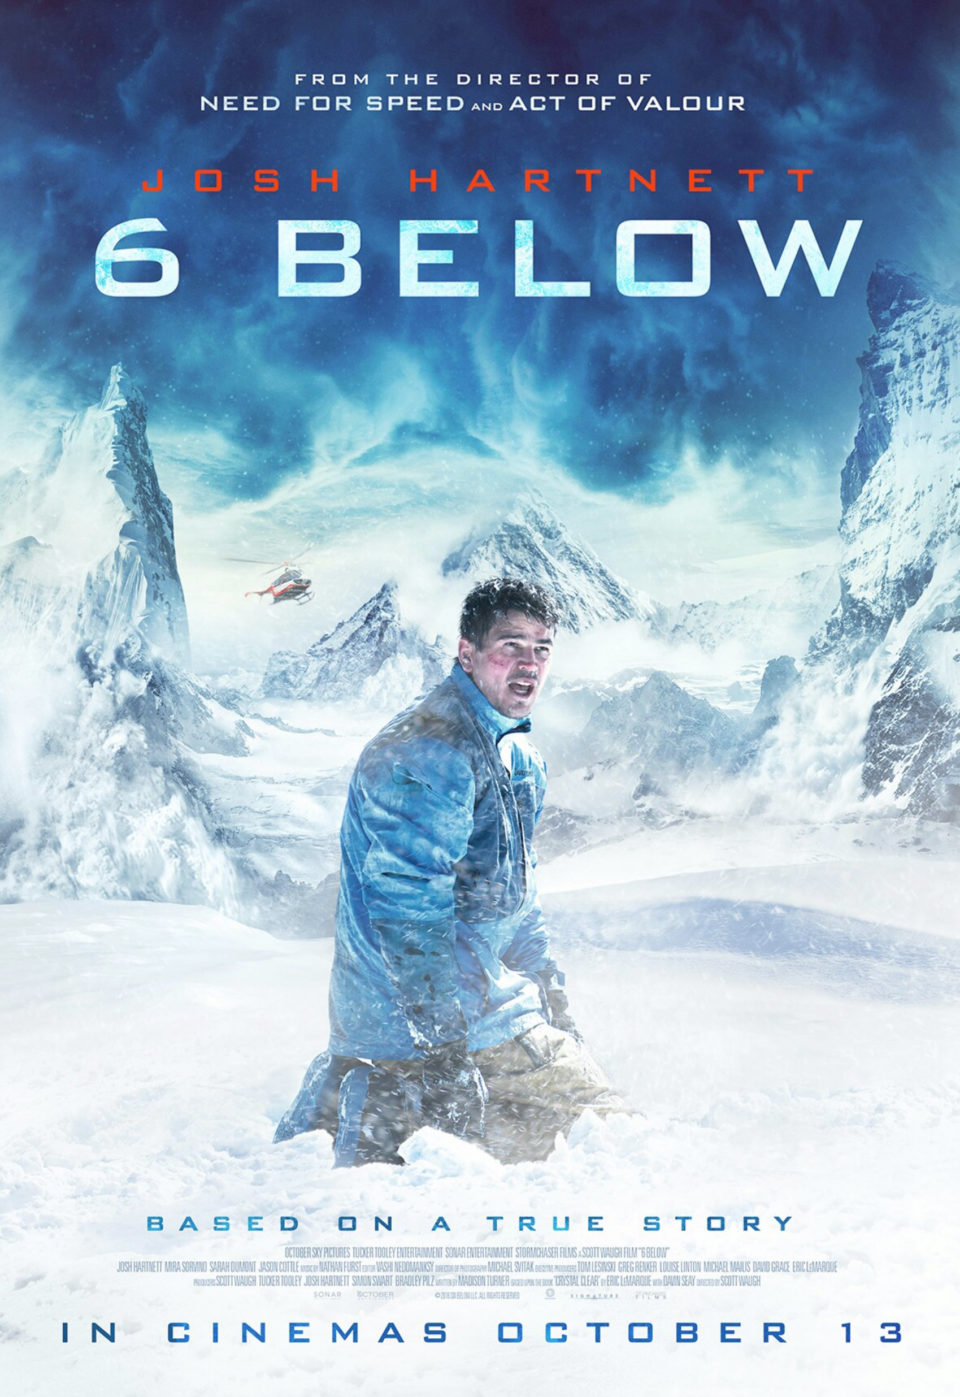 6 Below the Movie starring Josh Hartnett